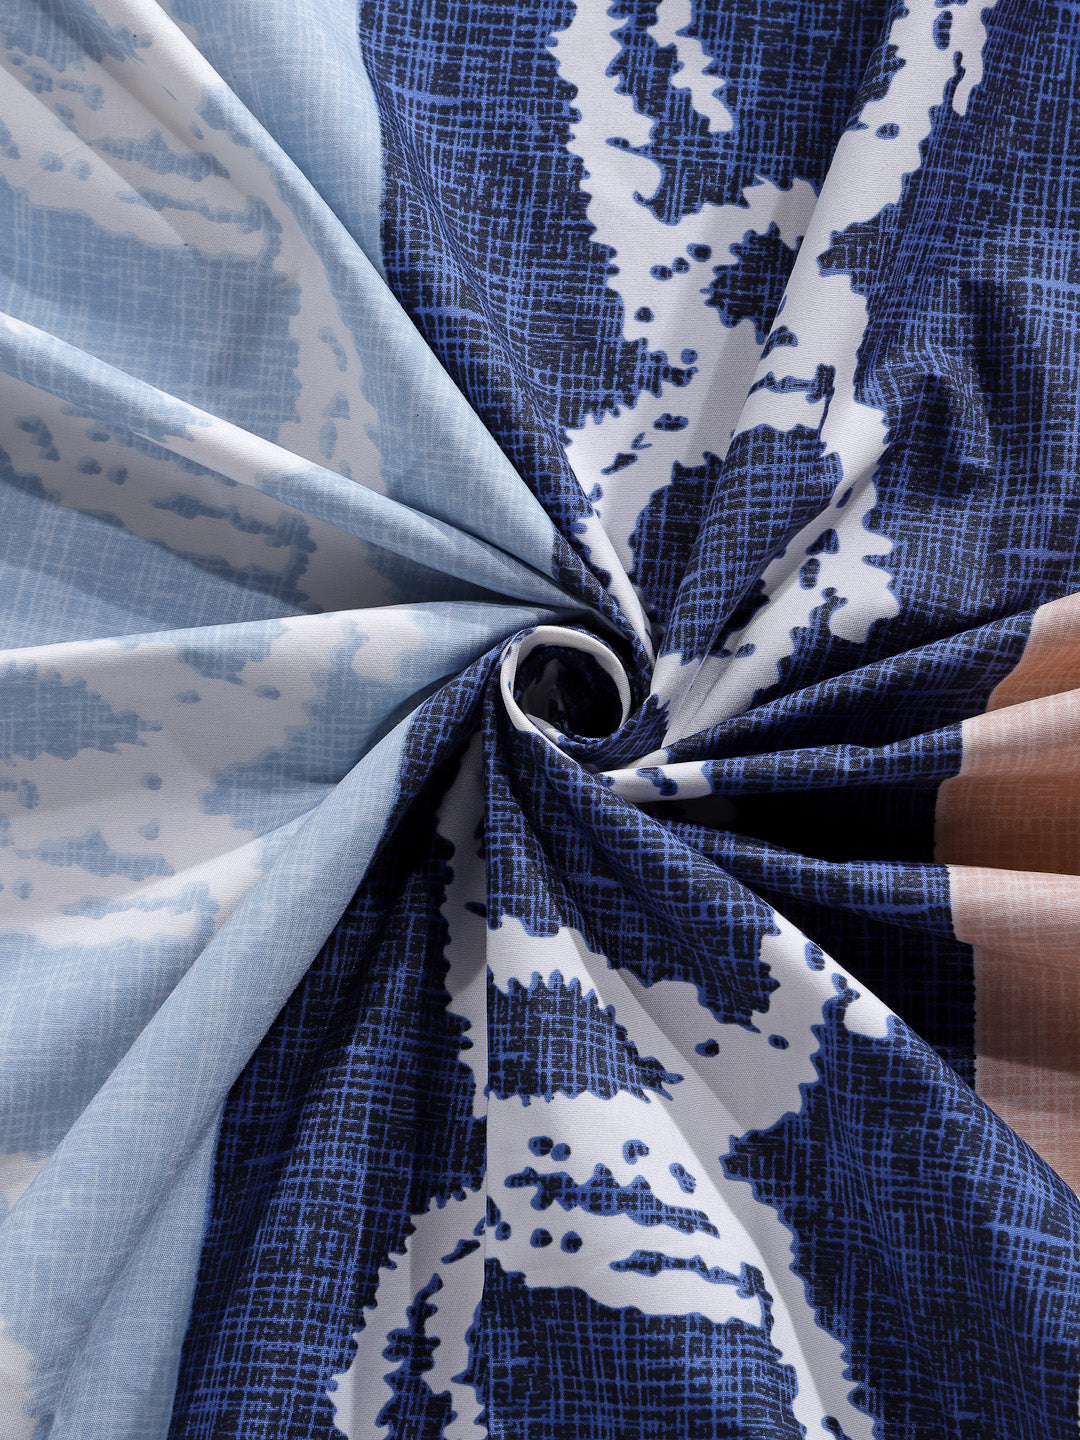 Arrabi Multi Graphic TC Cotton Blend Single Size Bedsheet with 1 Pillow Cover (220 X 150 cm)